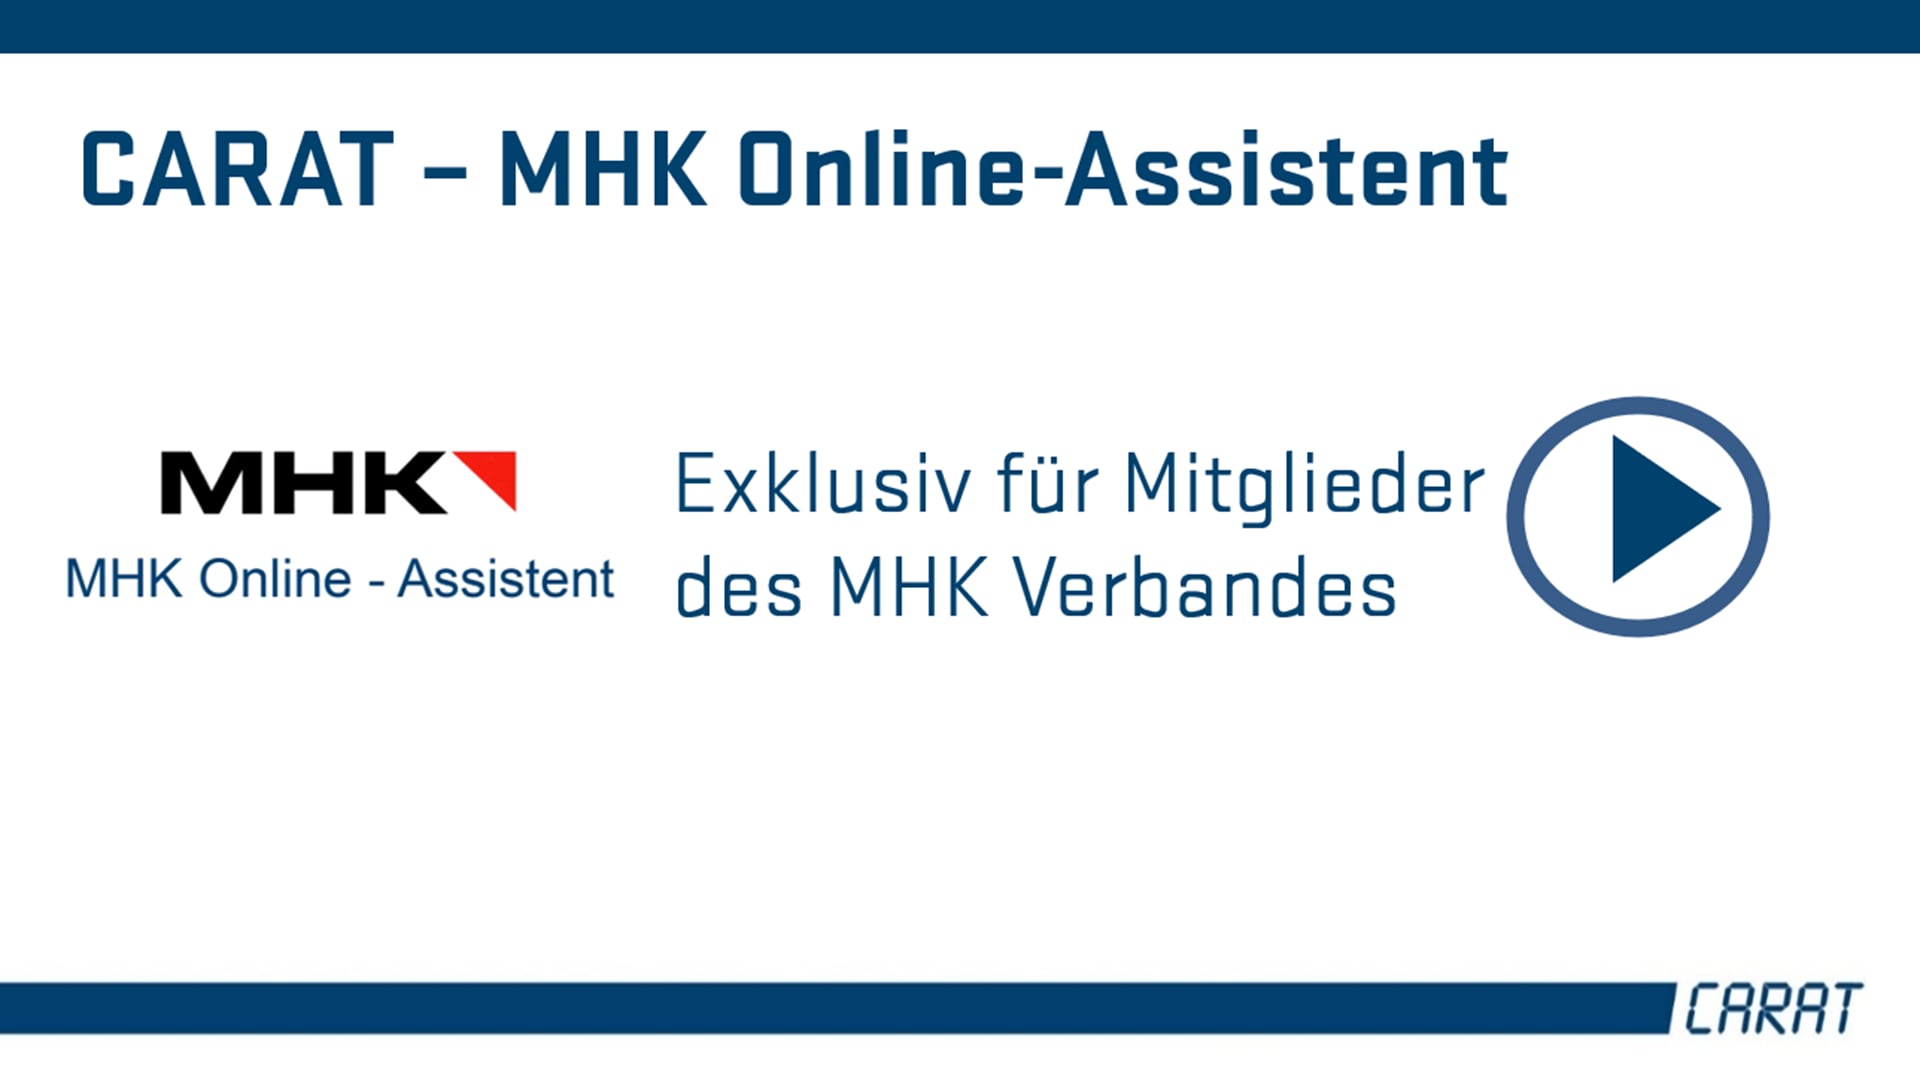 MHK Group Online Assistent